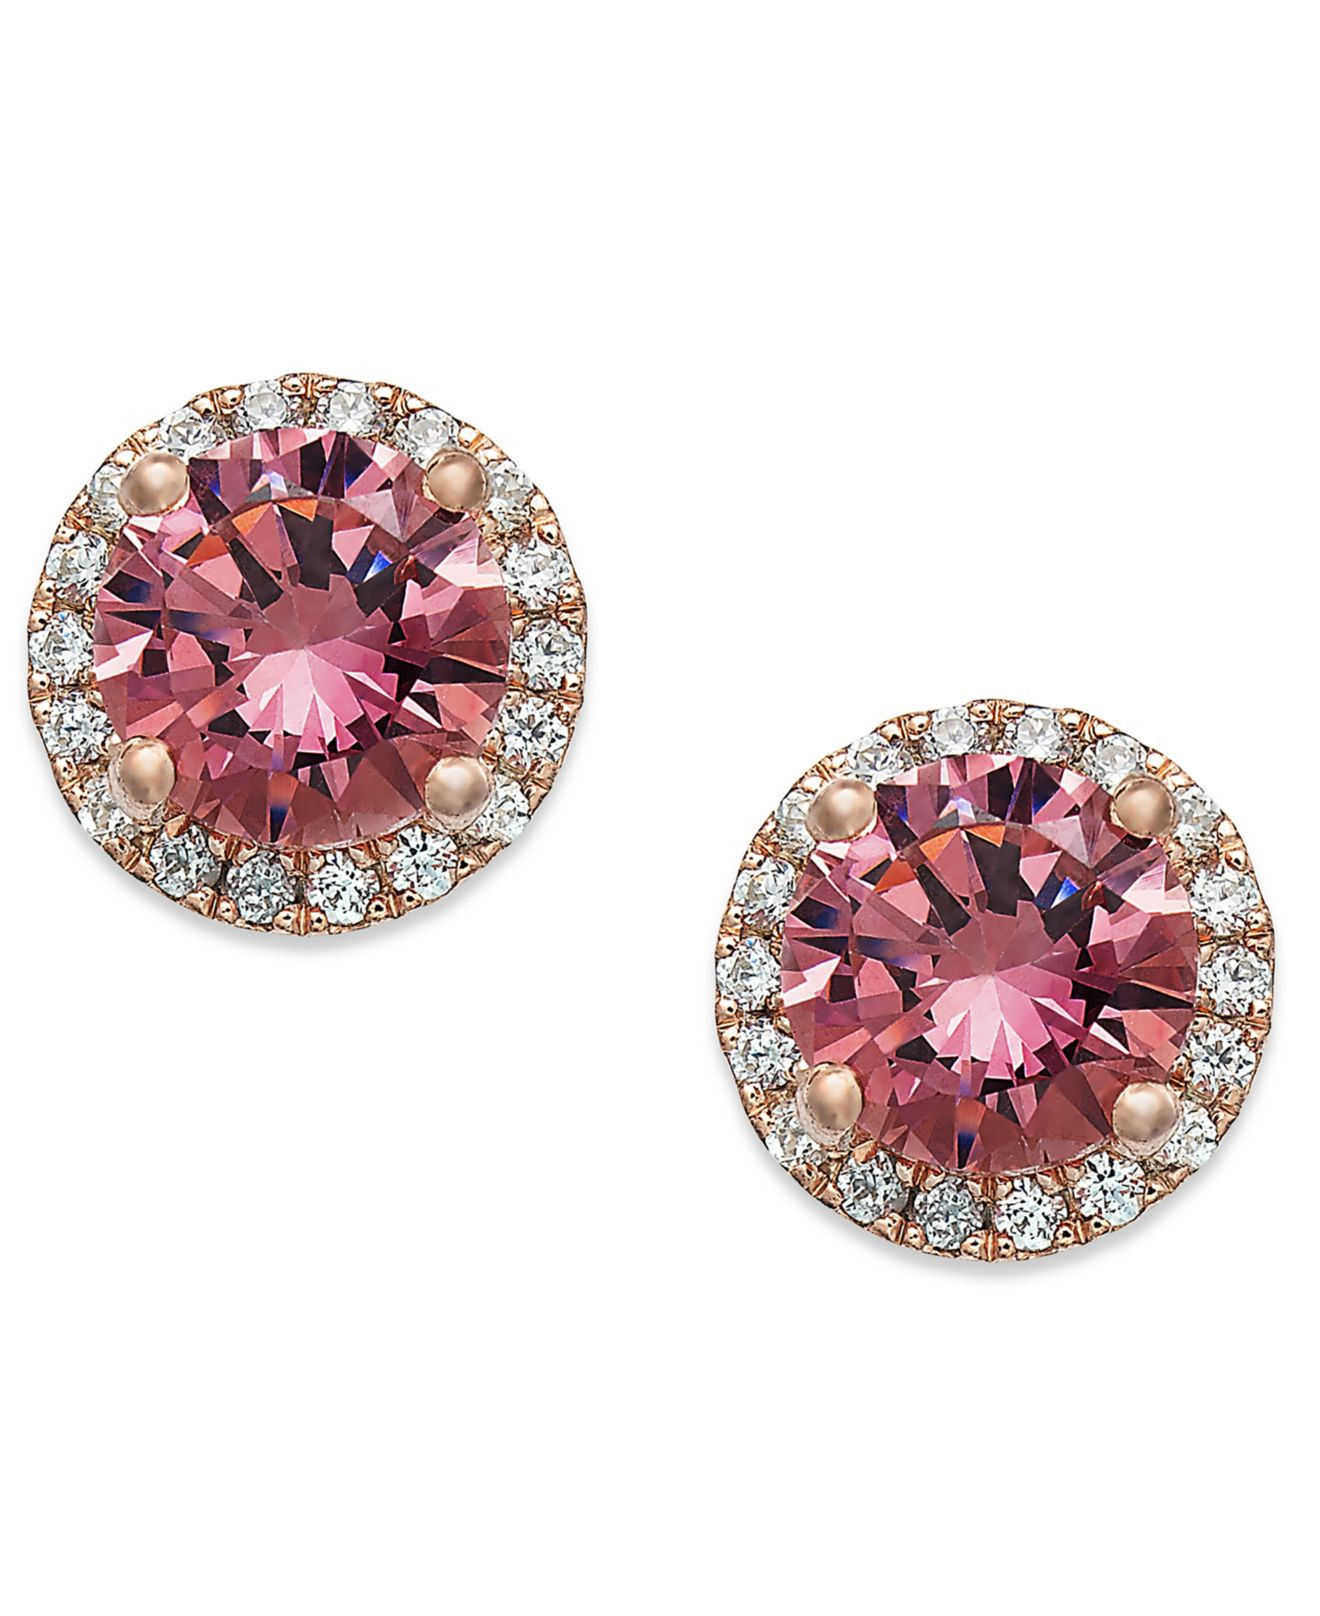 Pink Stud Earrings
 Lyst Macy S 14k Rose Gold Over Sterling Silver Earrings